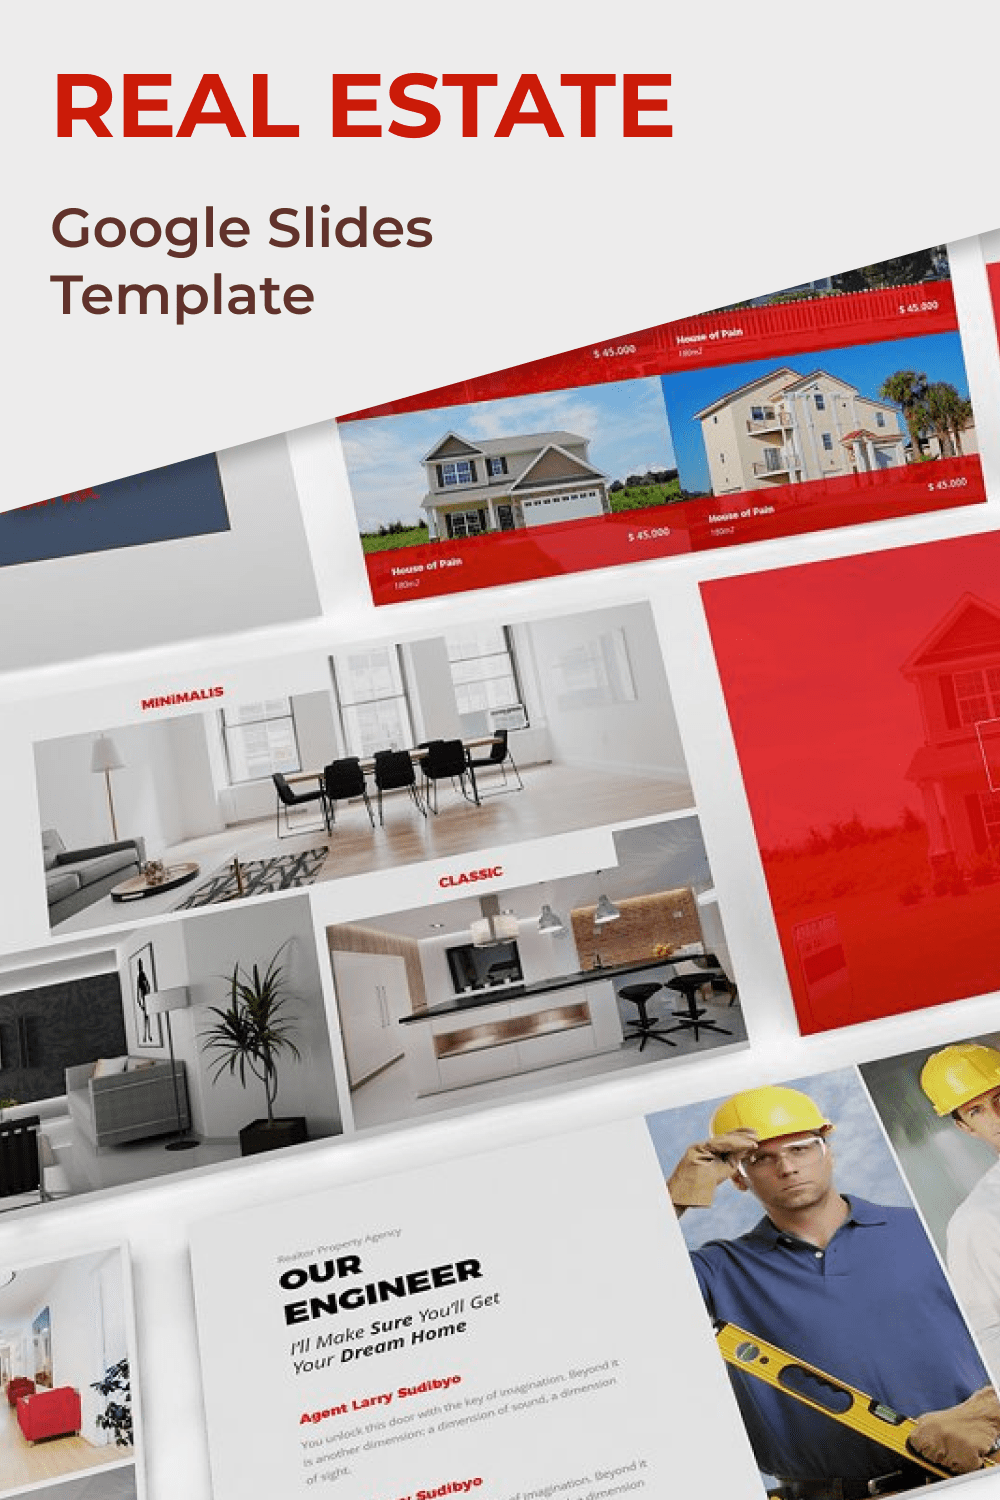 Real Estate Google Slides Template by MasterBundles Pinterest Collage Image.